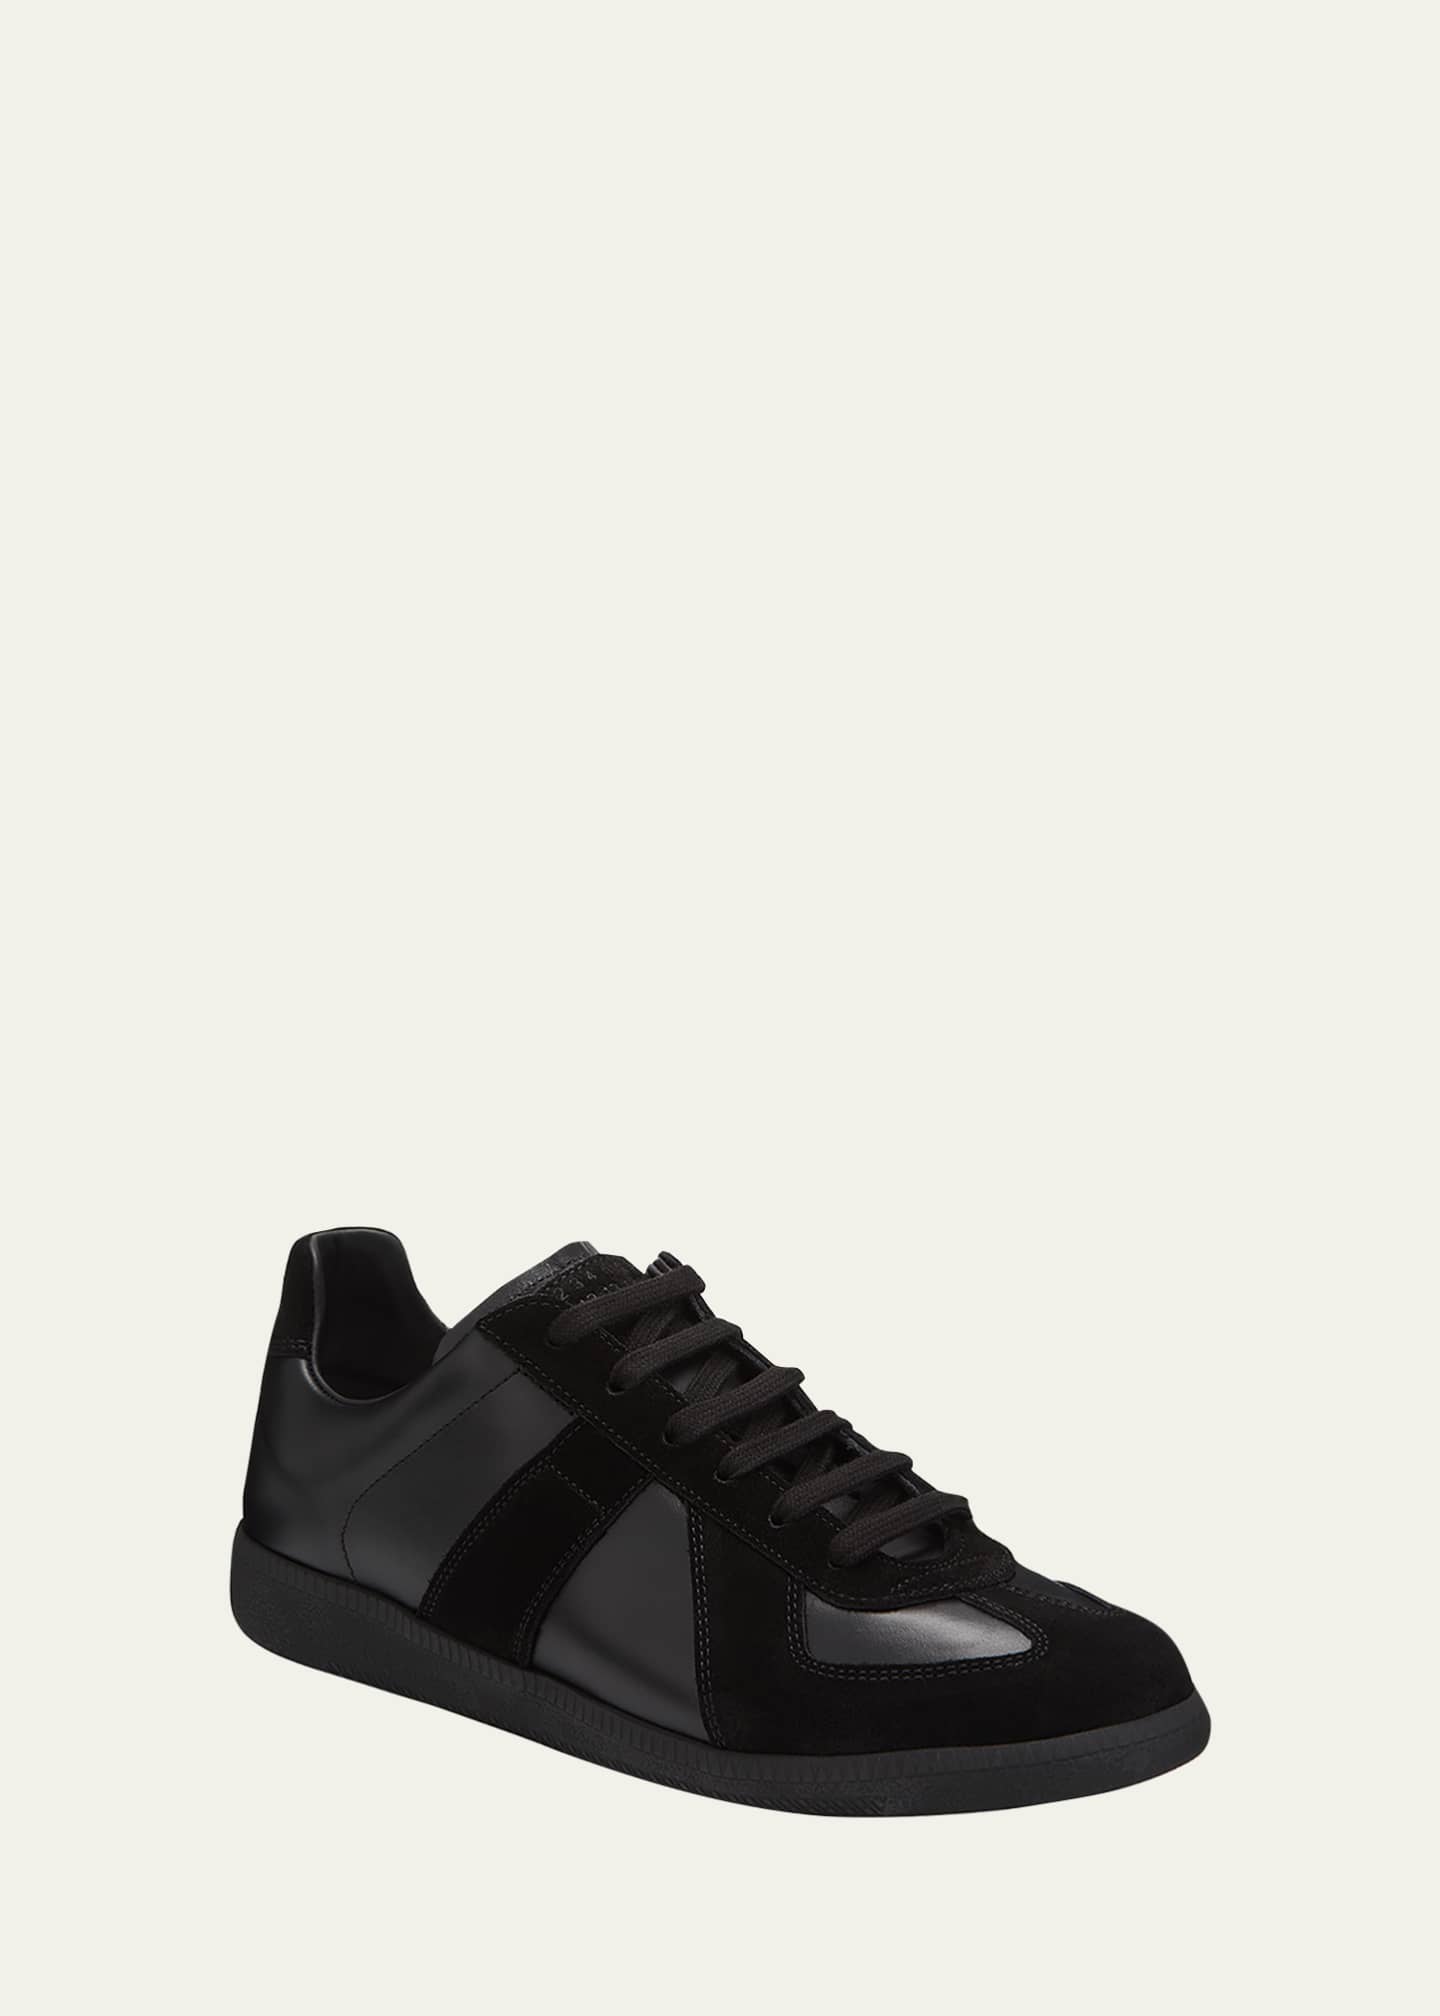 Maison Margiela Replica Sneaker In Black/pollock